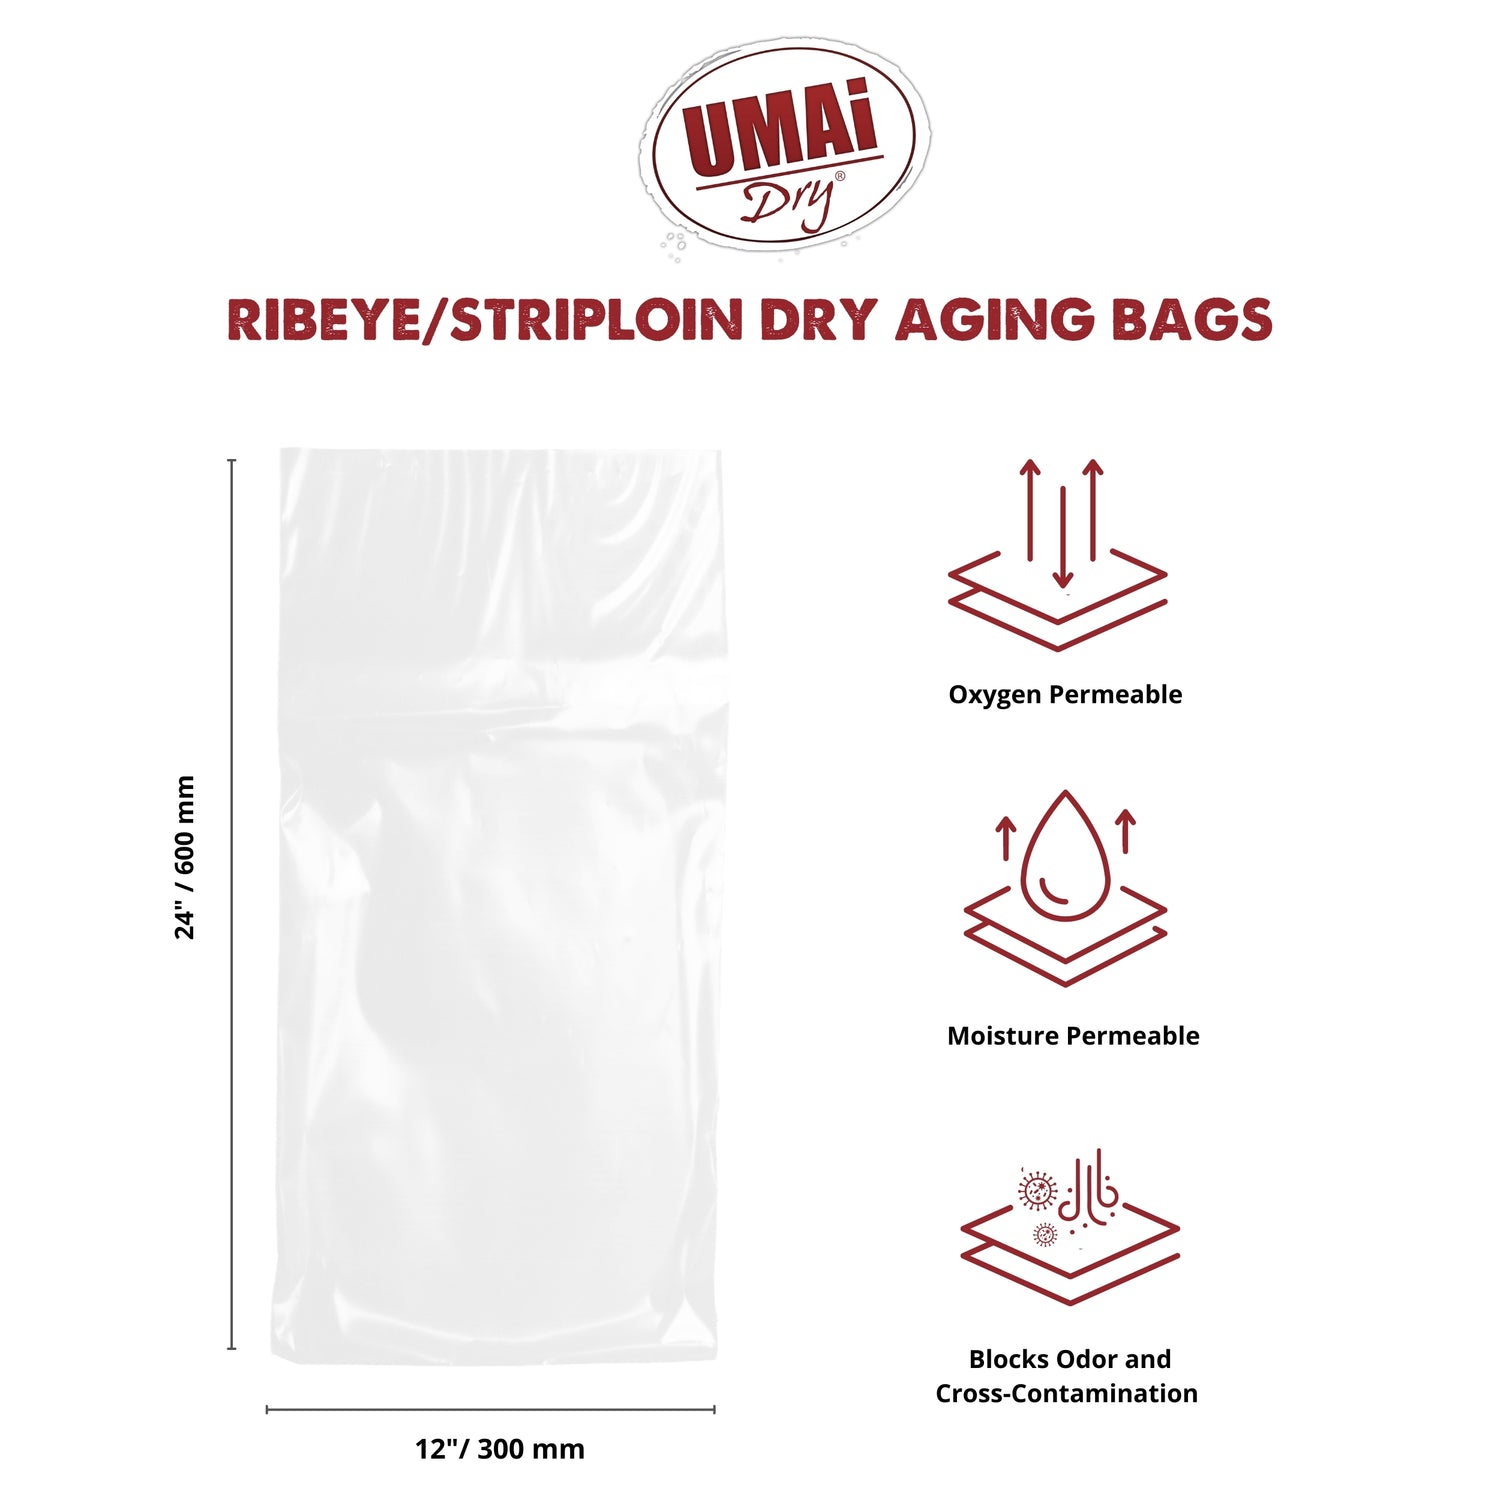 UMAI Dry Aging Ribeye/Striploin Bags  - UMAi Dry